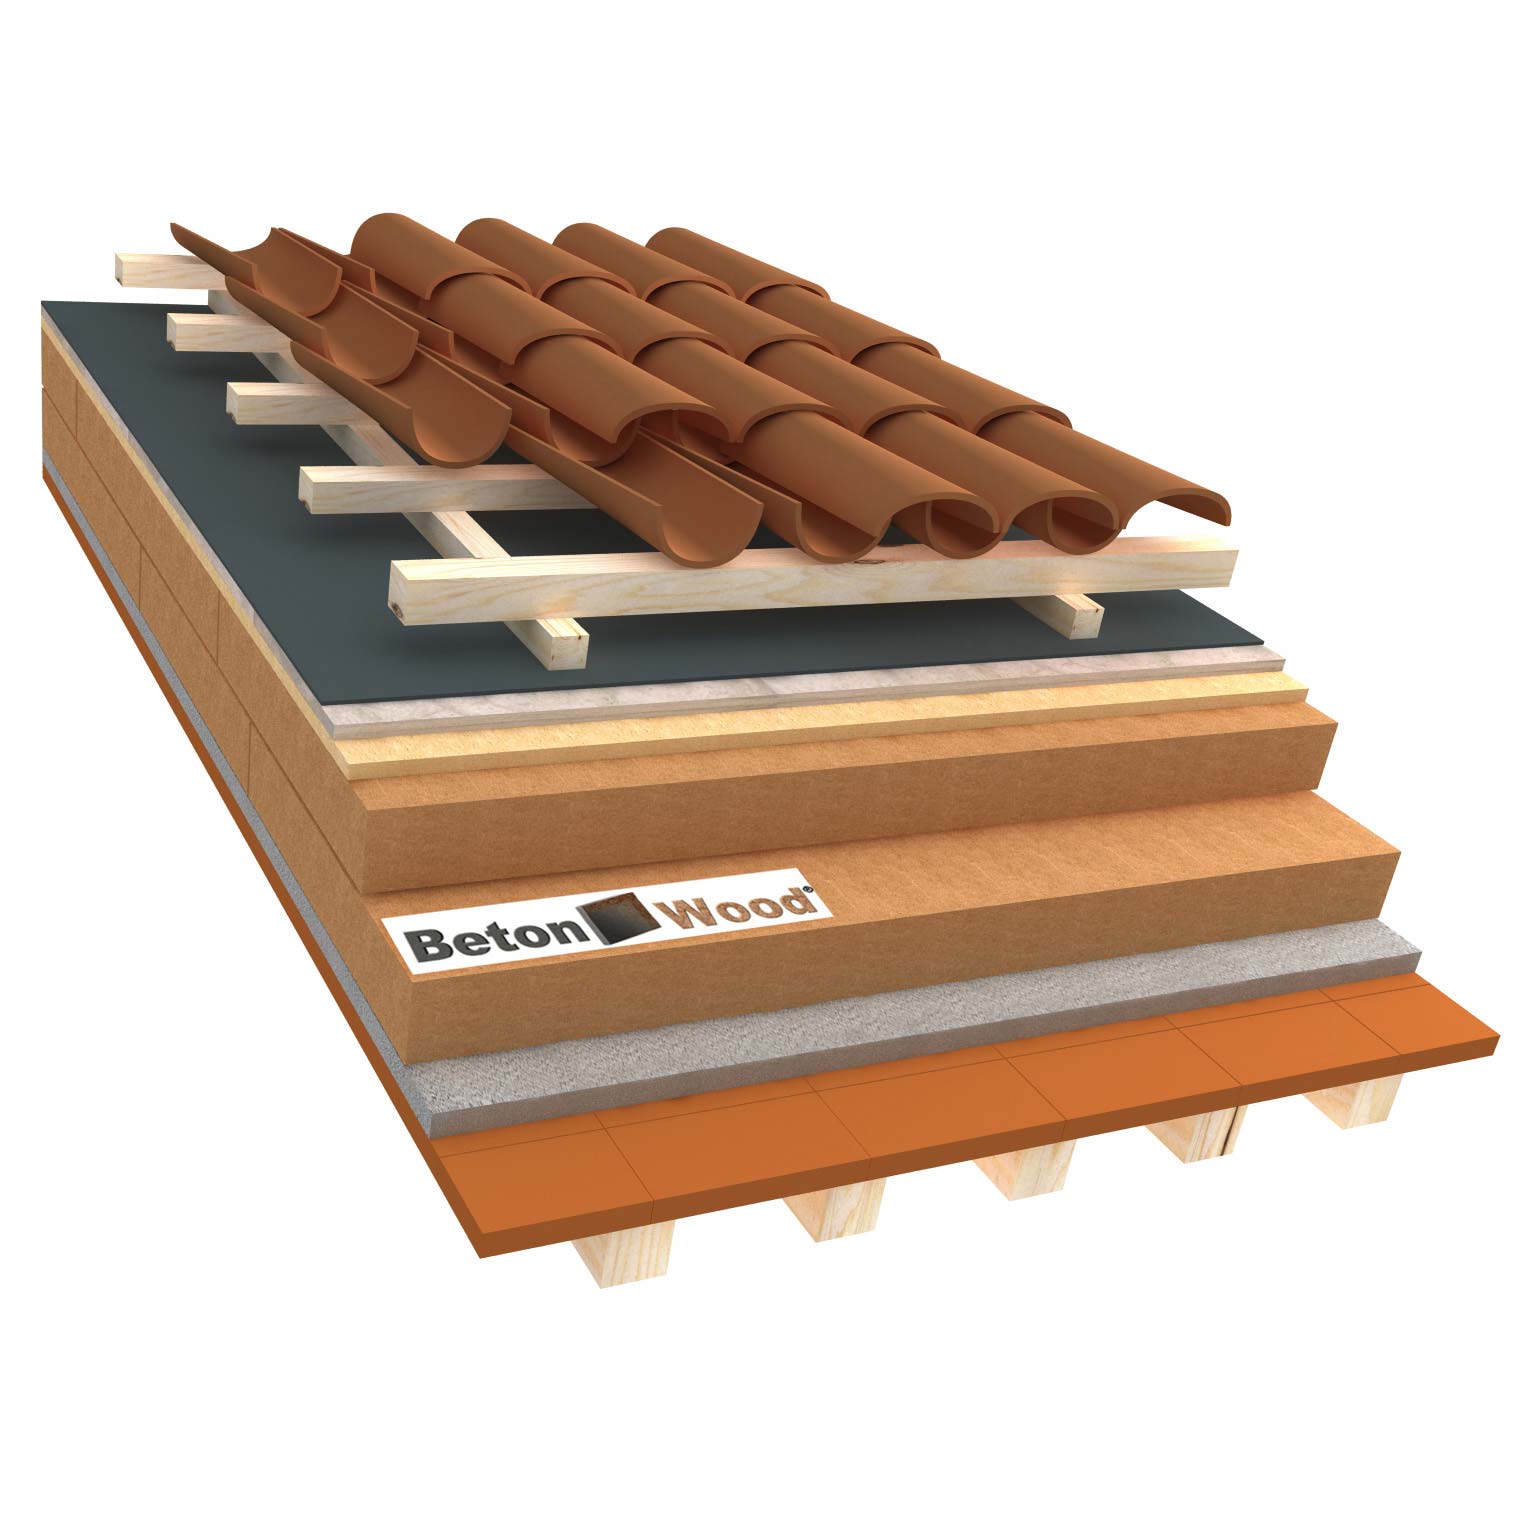 Fiber wood, Isorel and BetonWood on terracotta roof